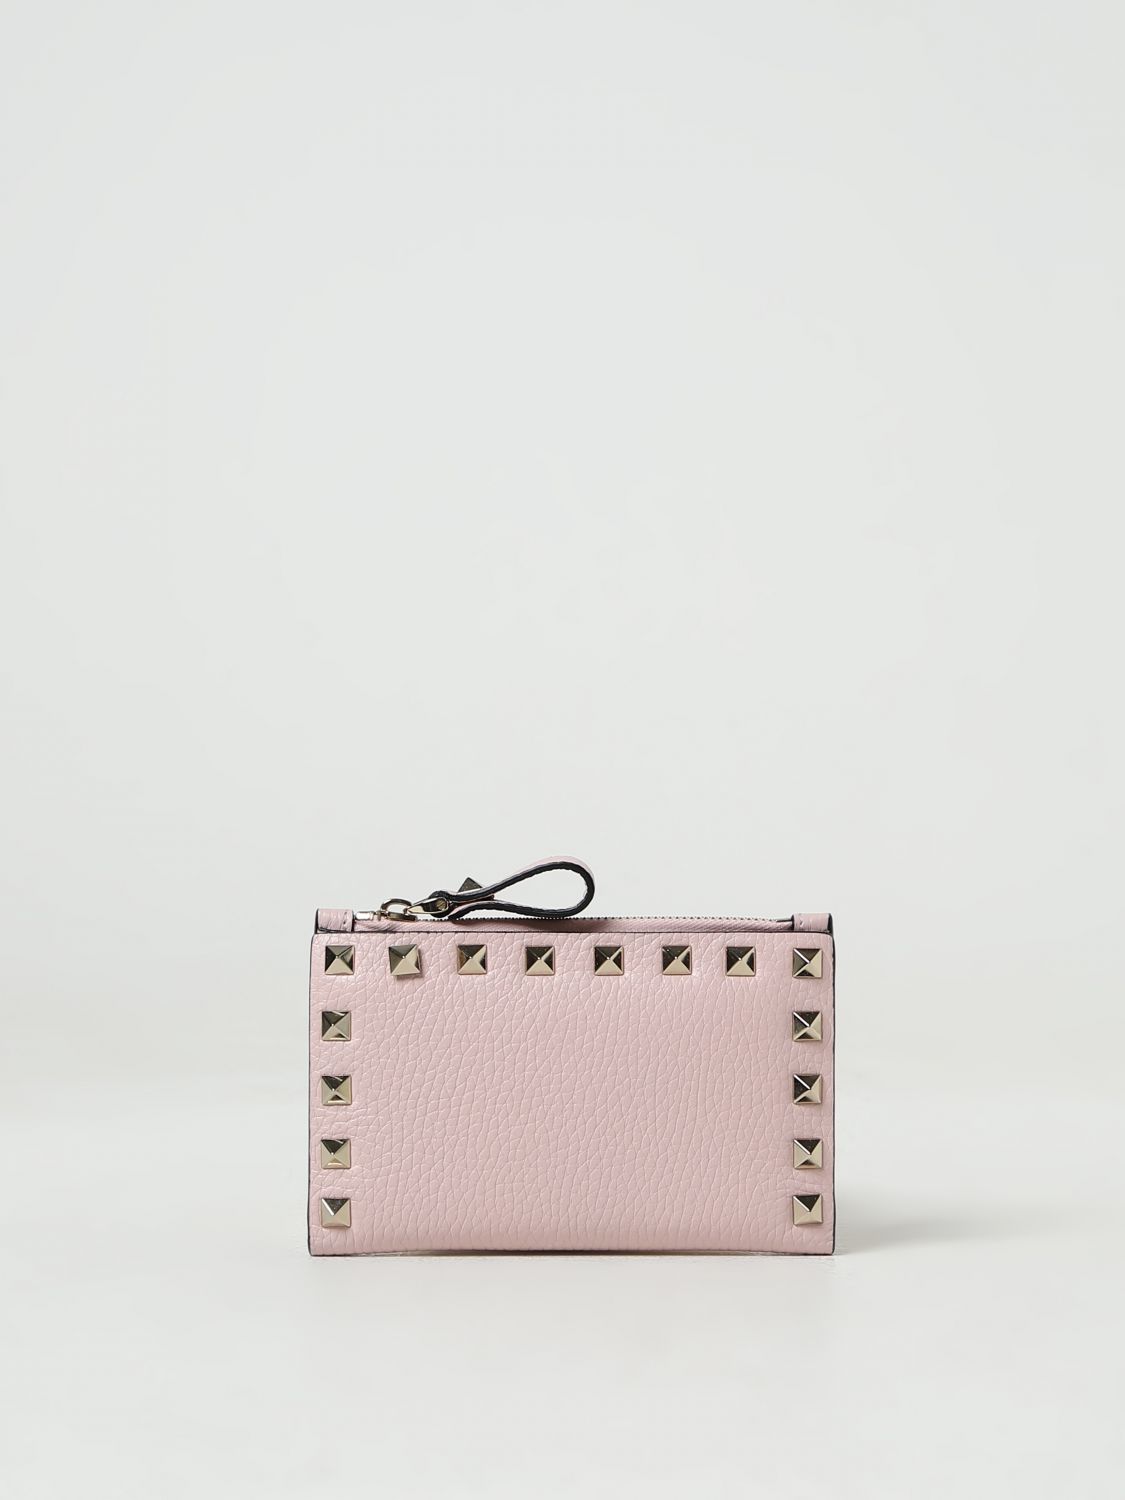 Valentino Garavani Rockstud Wallet In Grained Leather In Pink